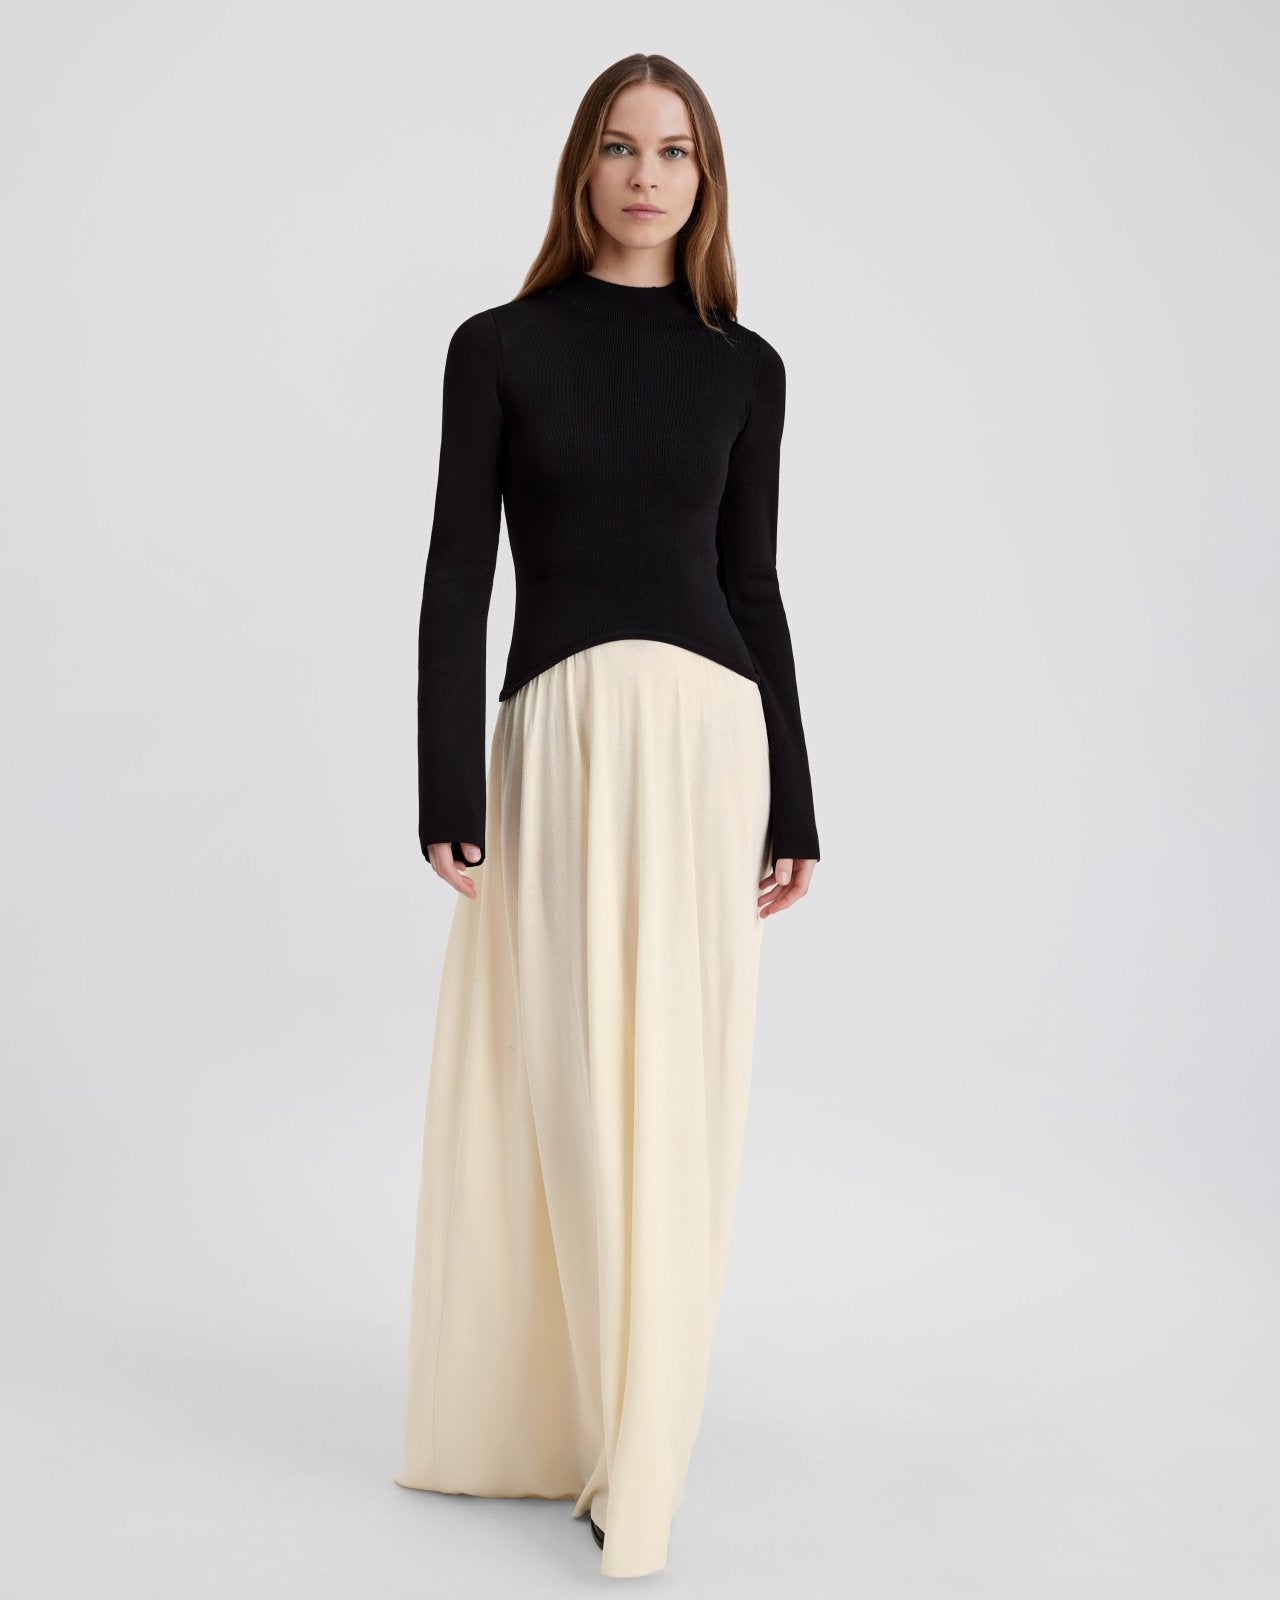 Trendy Semi Sheer White Skirt Long Dress Solid Color Display